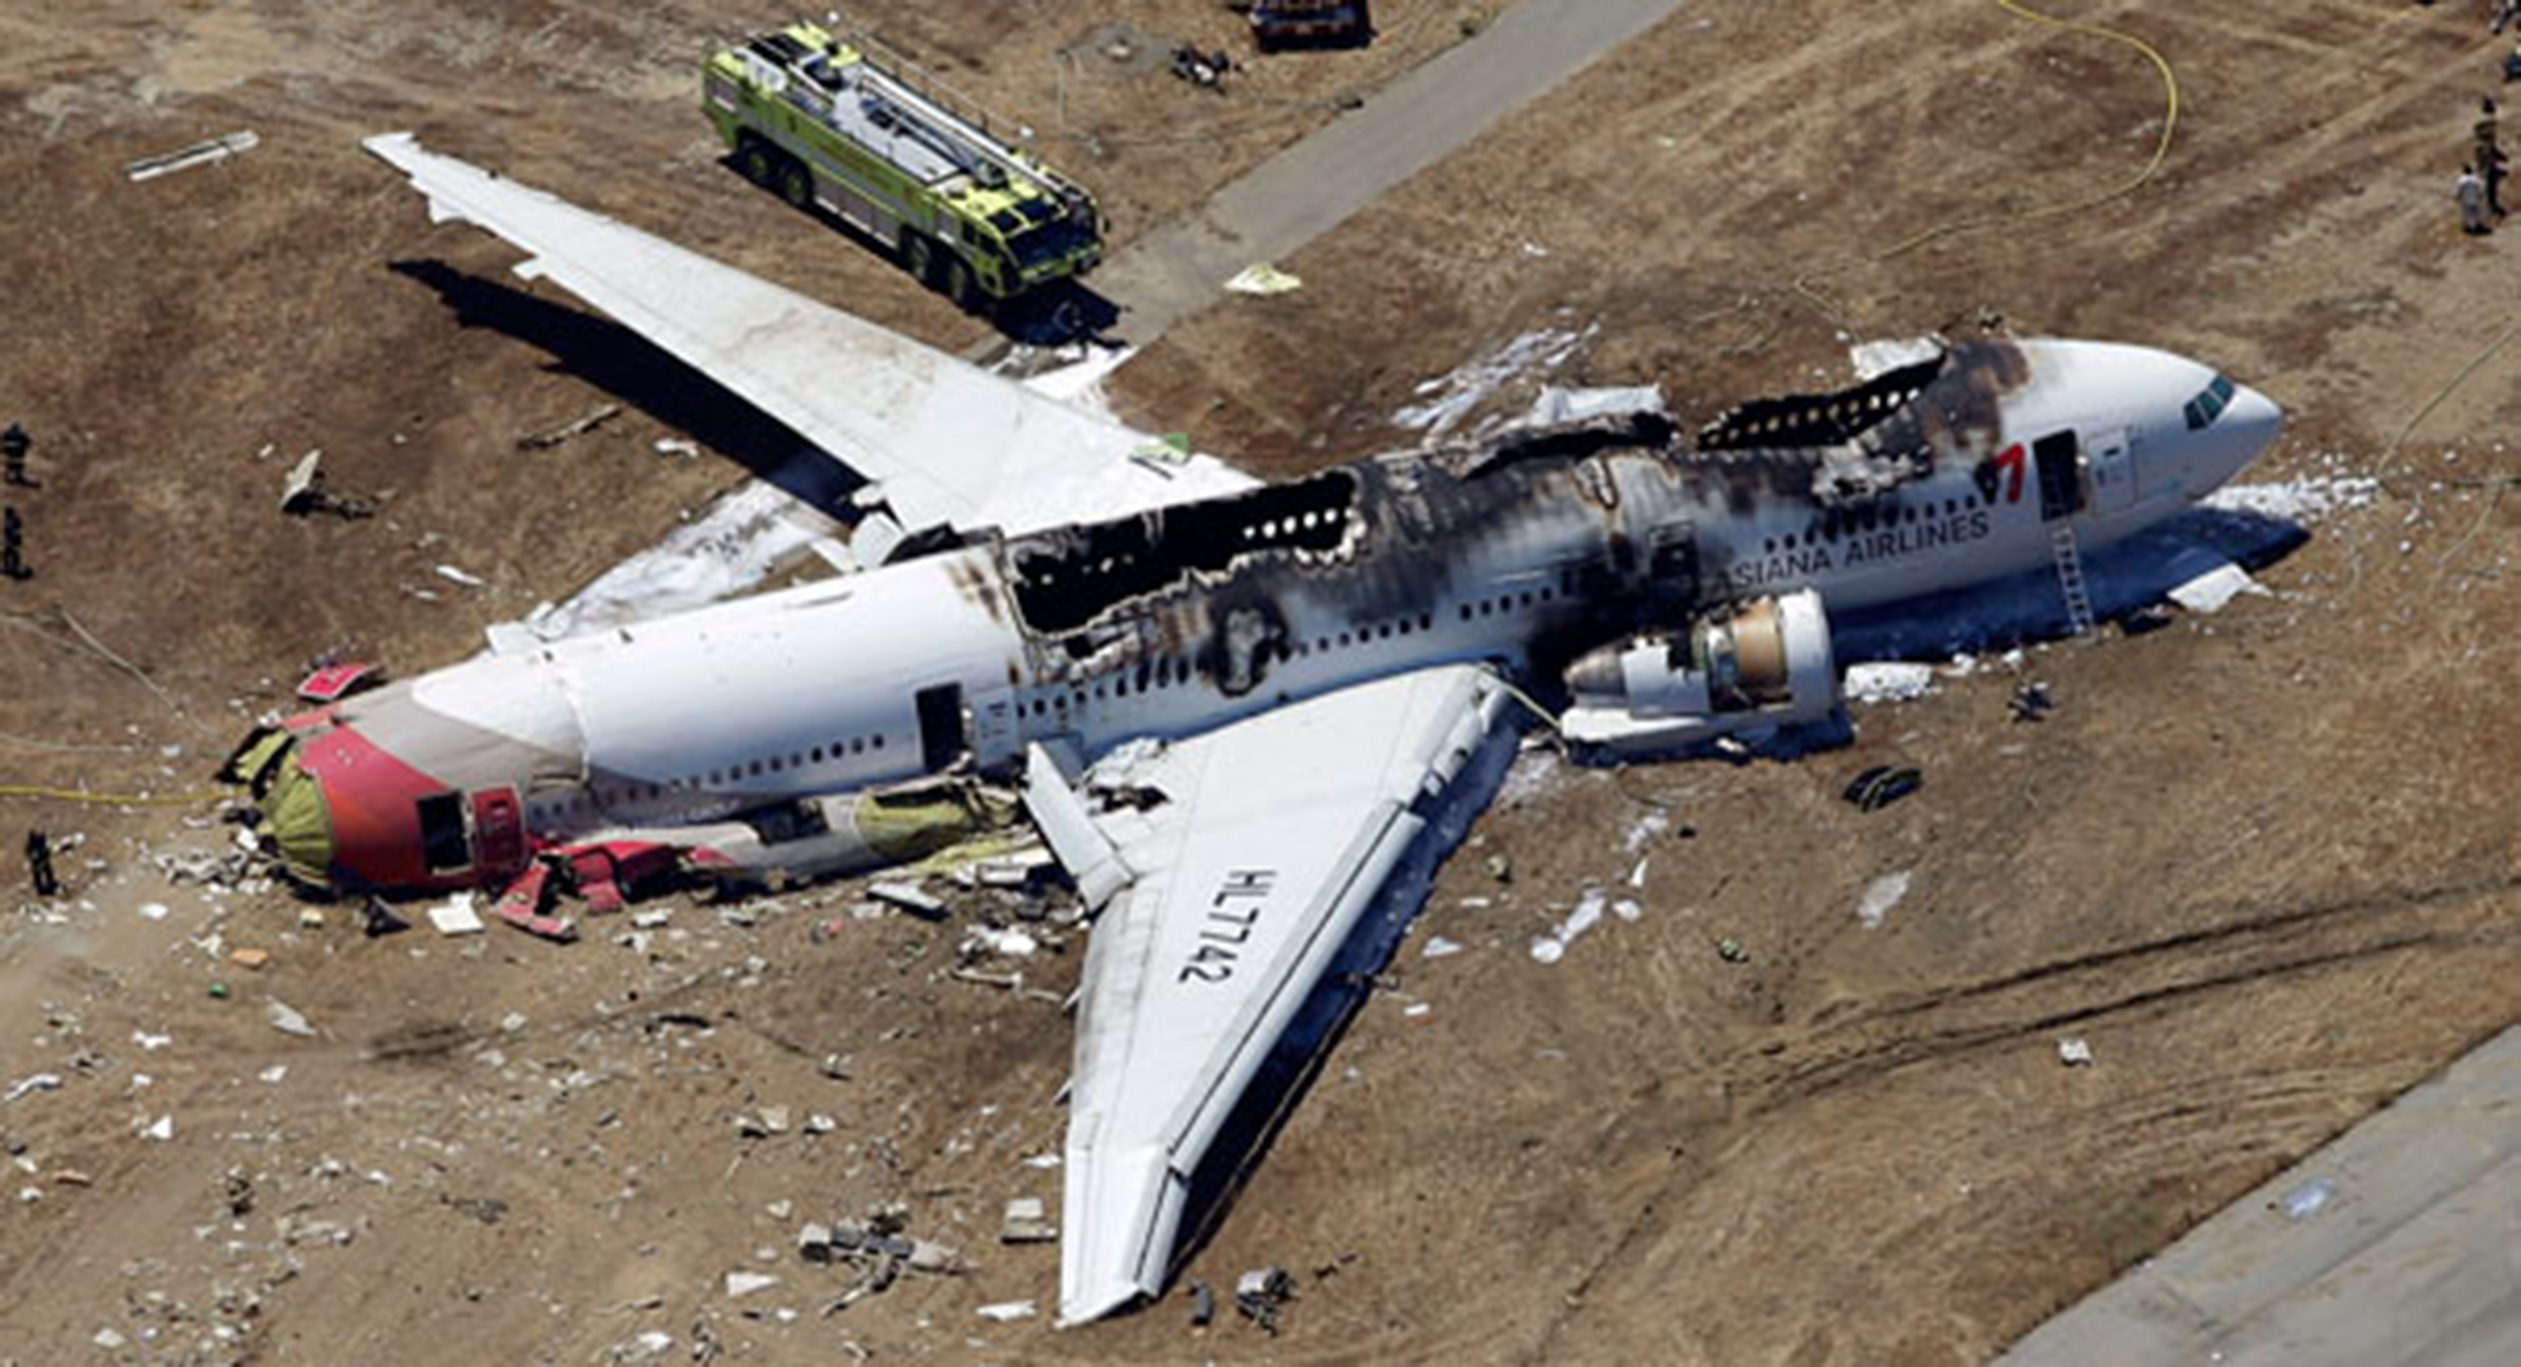 Asiana Flight 214's wreckage after a crash landing at SFO International Airport.The San Francisco News